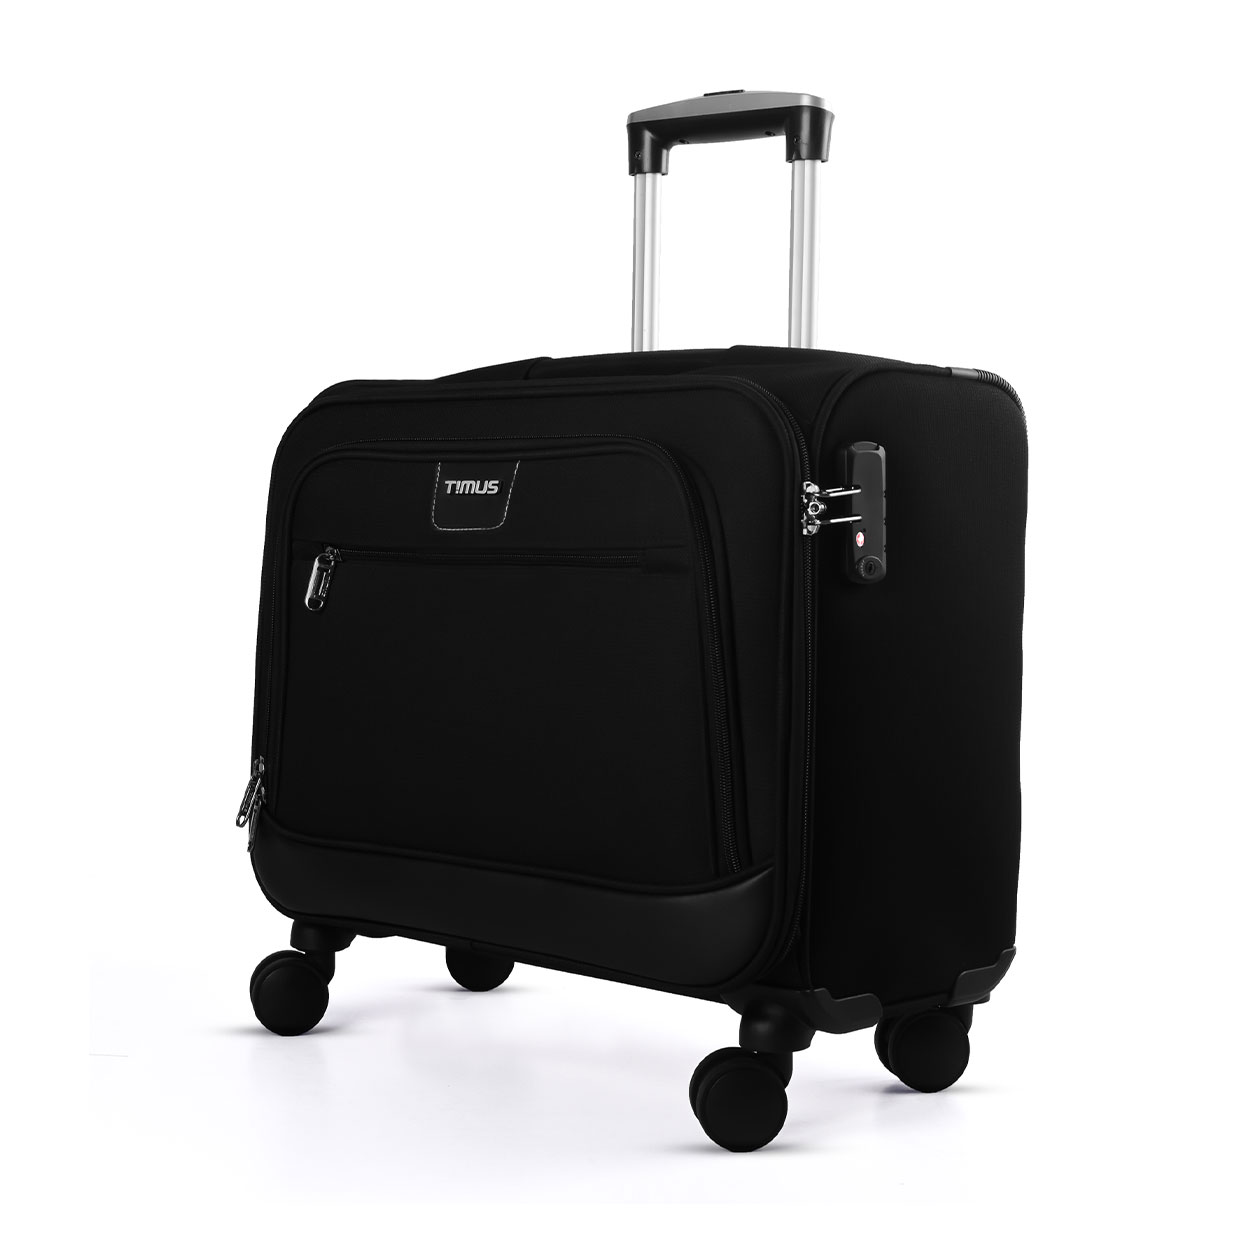 Timus-Lifestyle-Luggage-Soft-Luggage-Trolly-Bags-Atlanta-Pro-Black-2